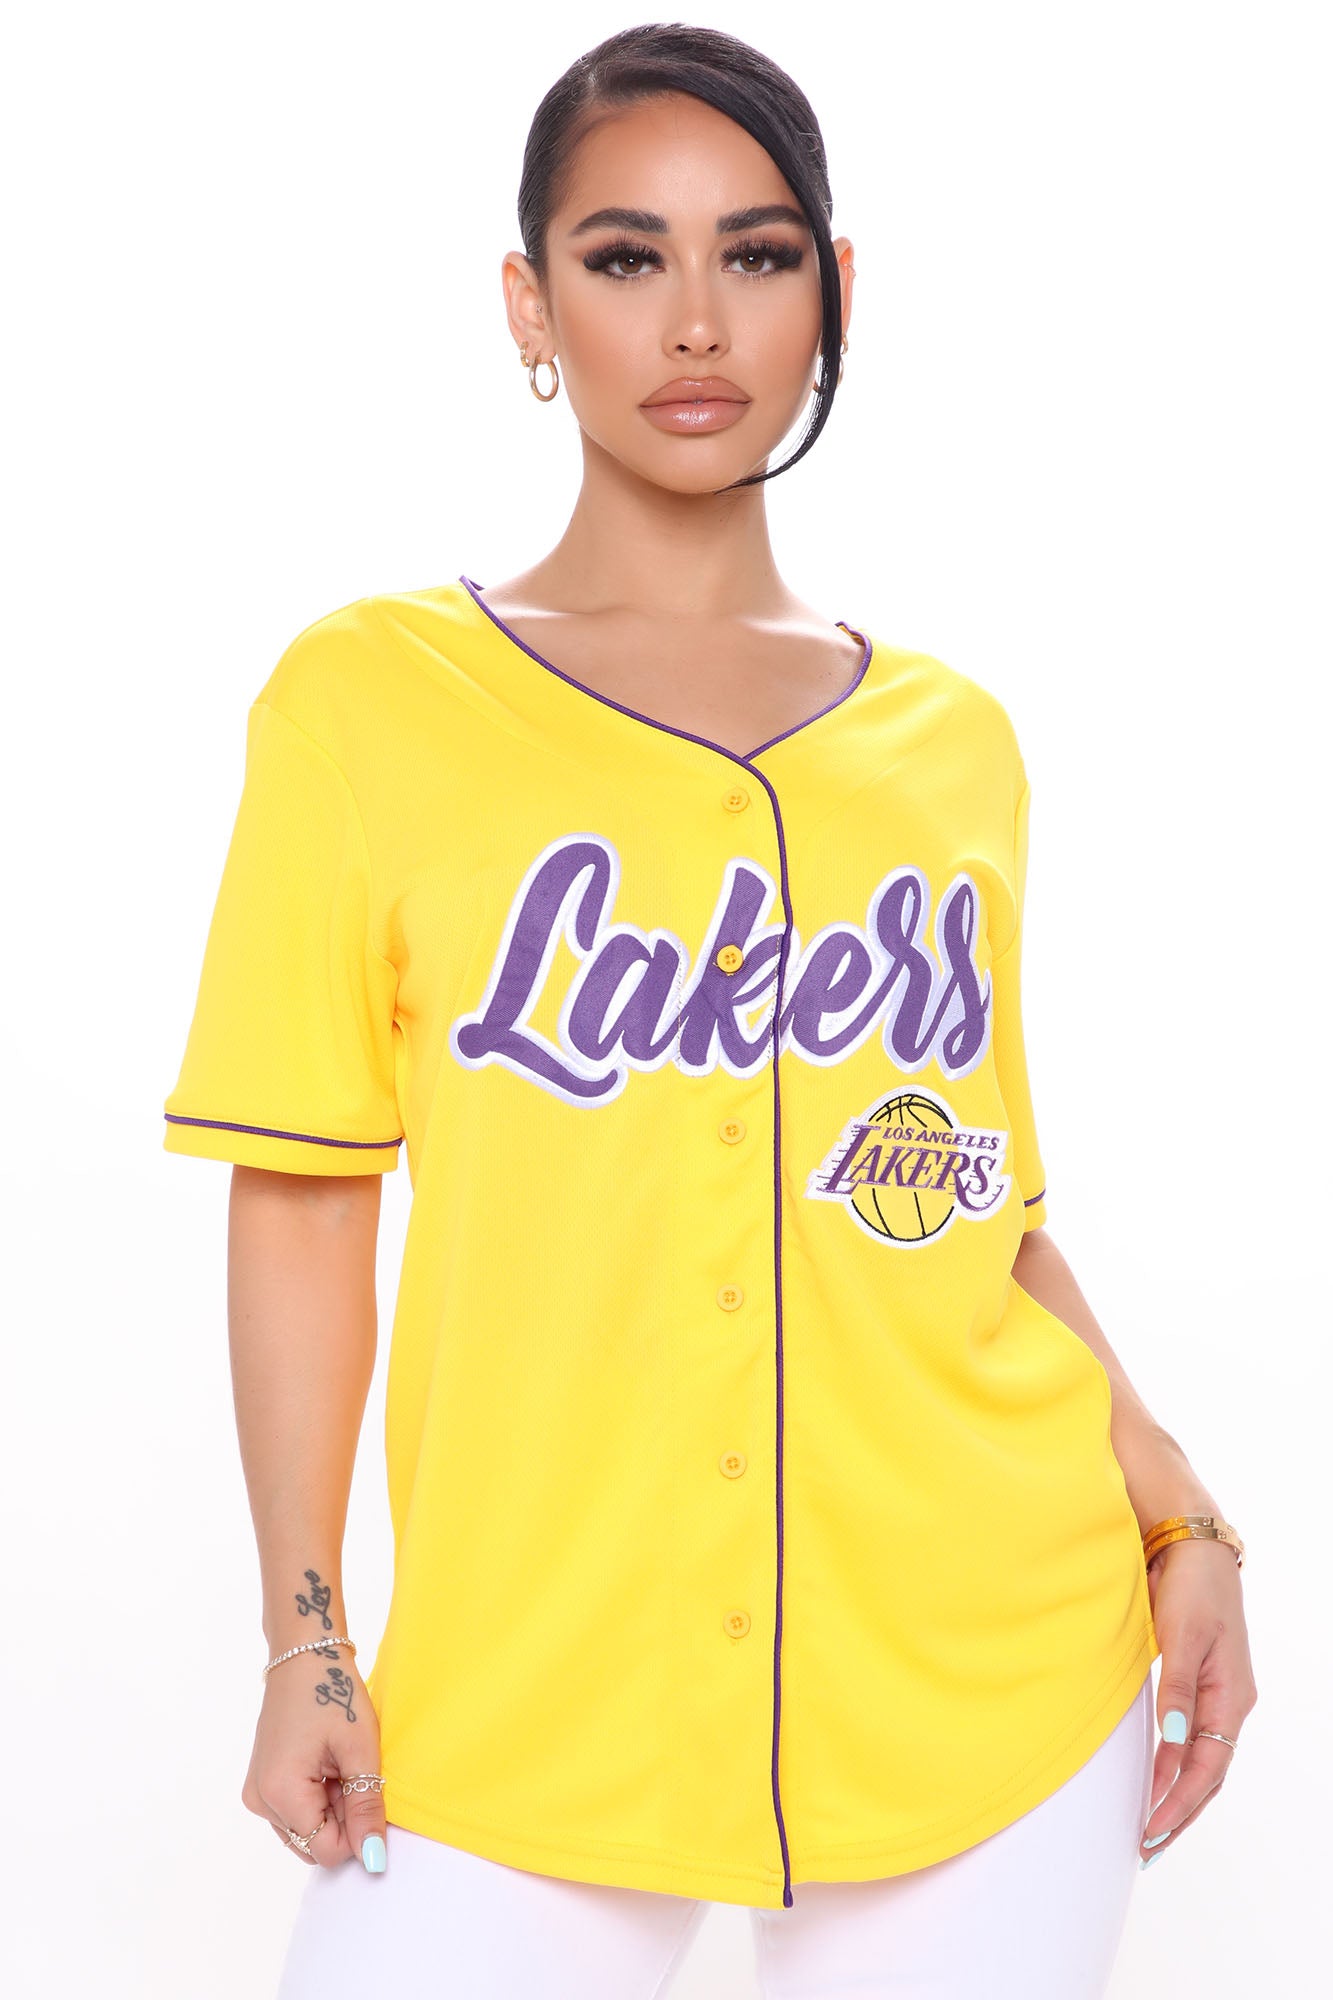 Los Angeles Lakers Womens in Los Angeles Lakers Team Shop